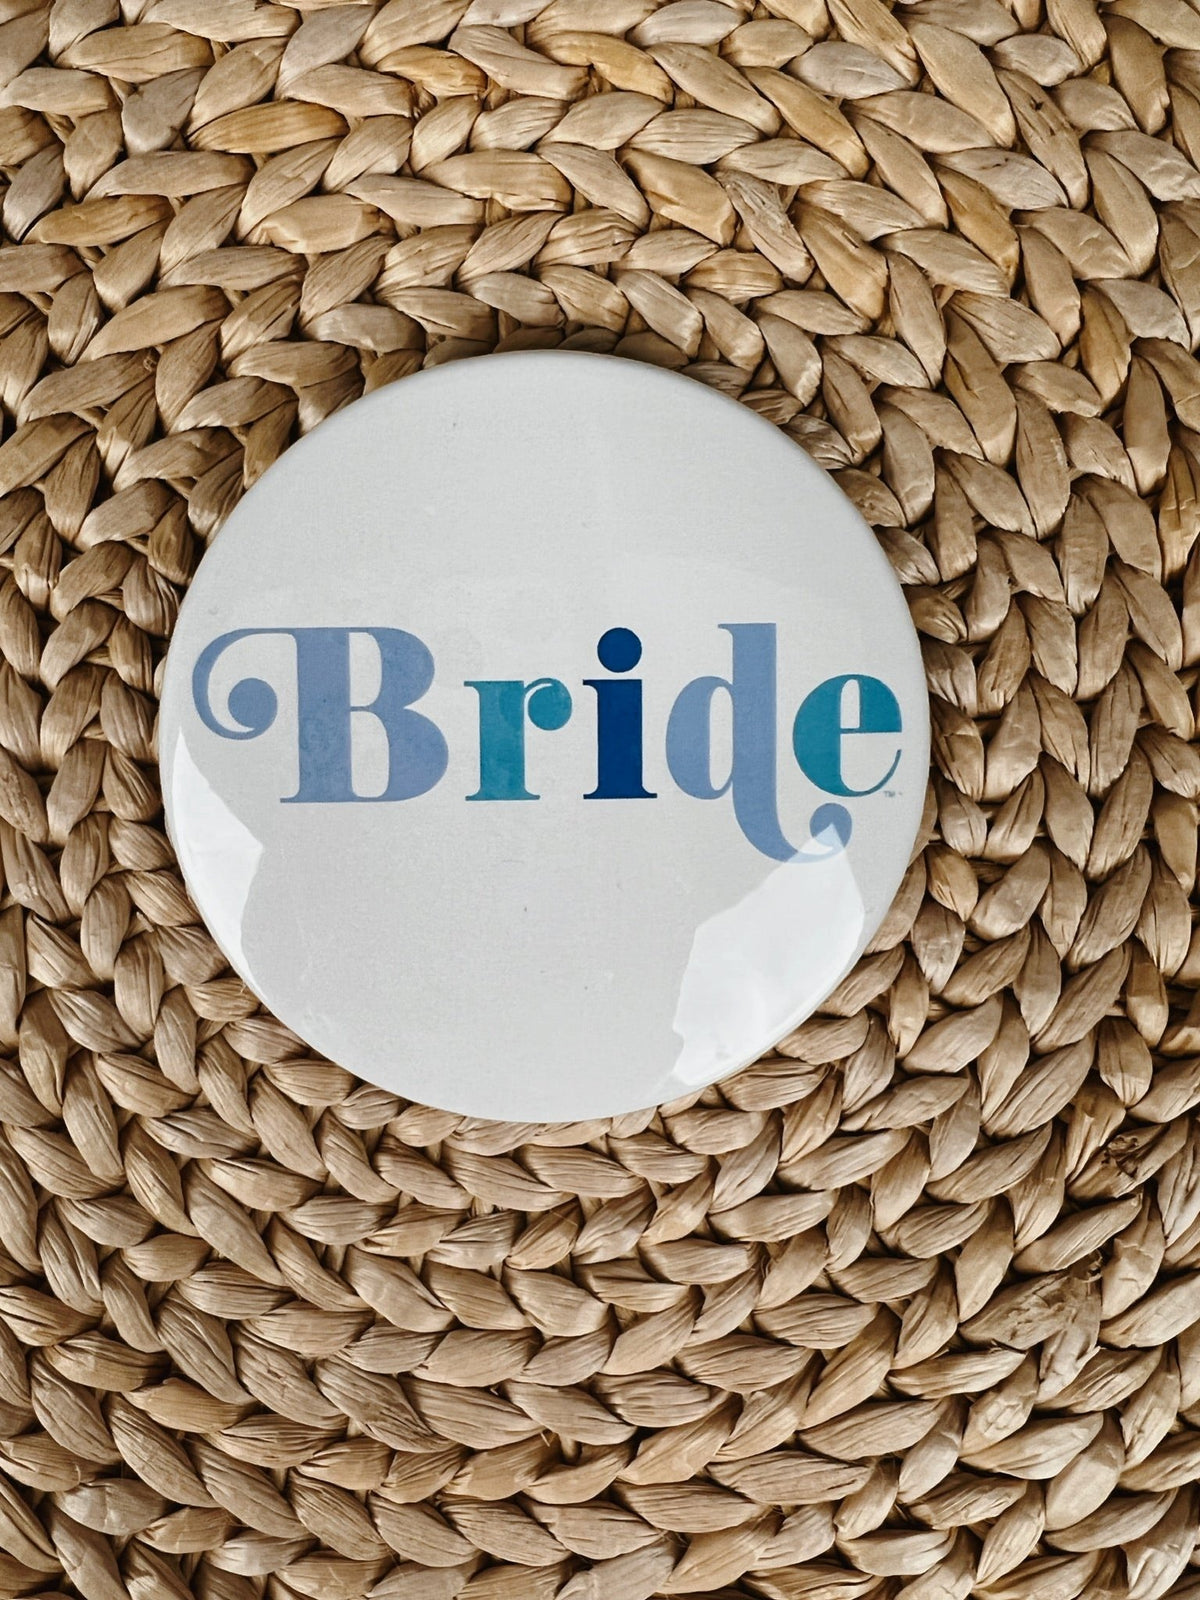 Bride multicolor button - Stylish button -  Cute Bridal Collection at Lush Fashion Lounge Boutique in Oklahoma City